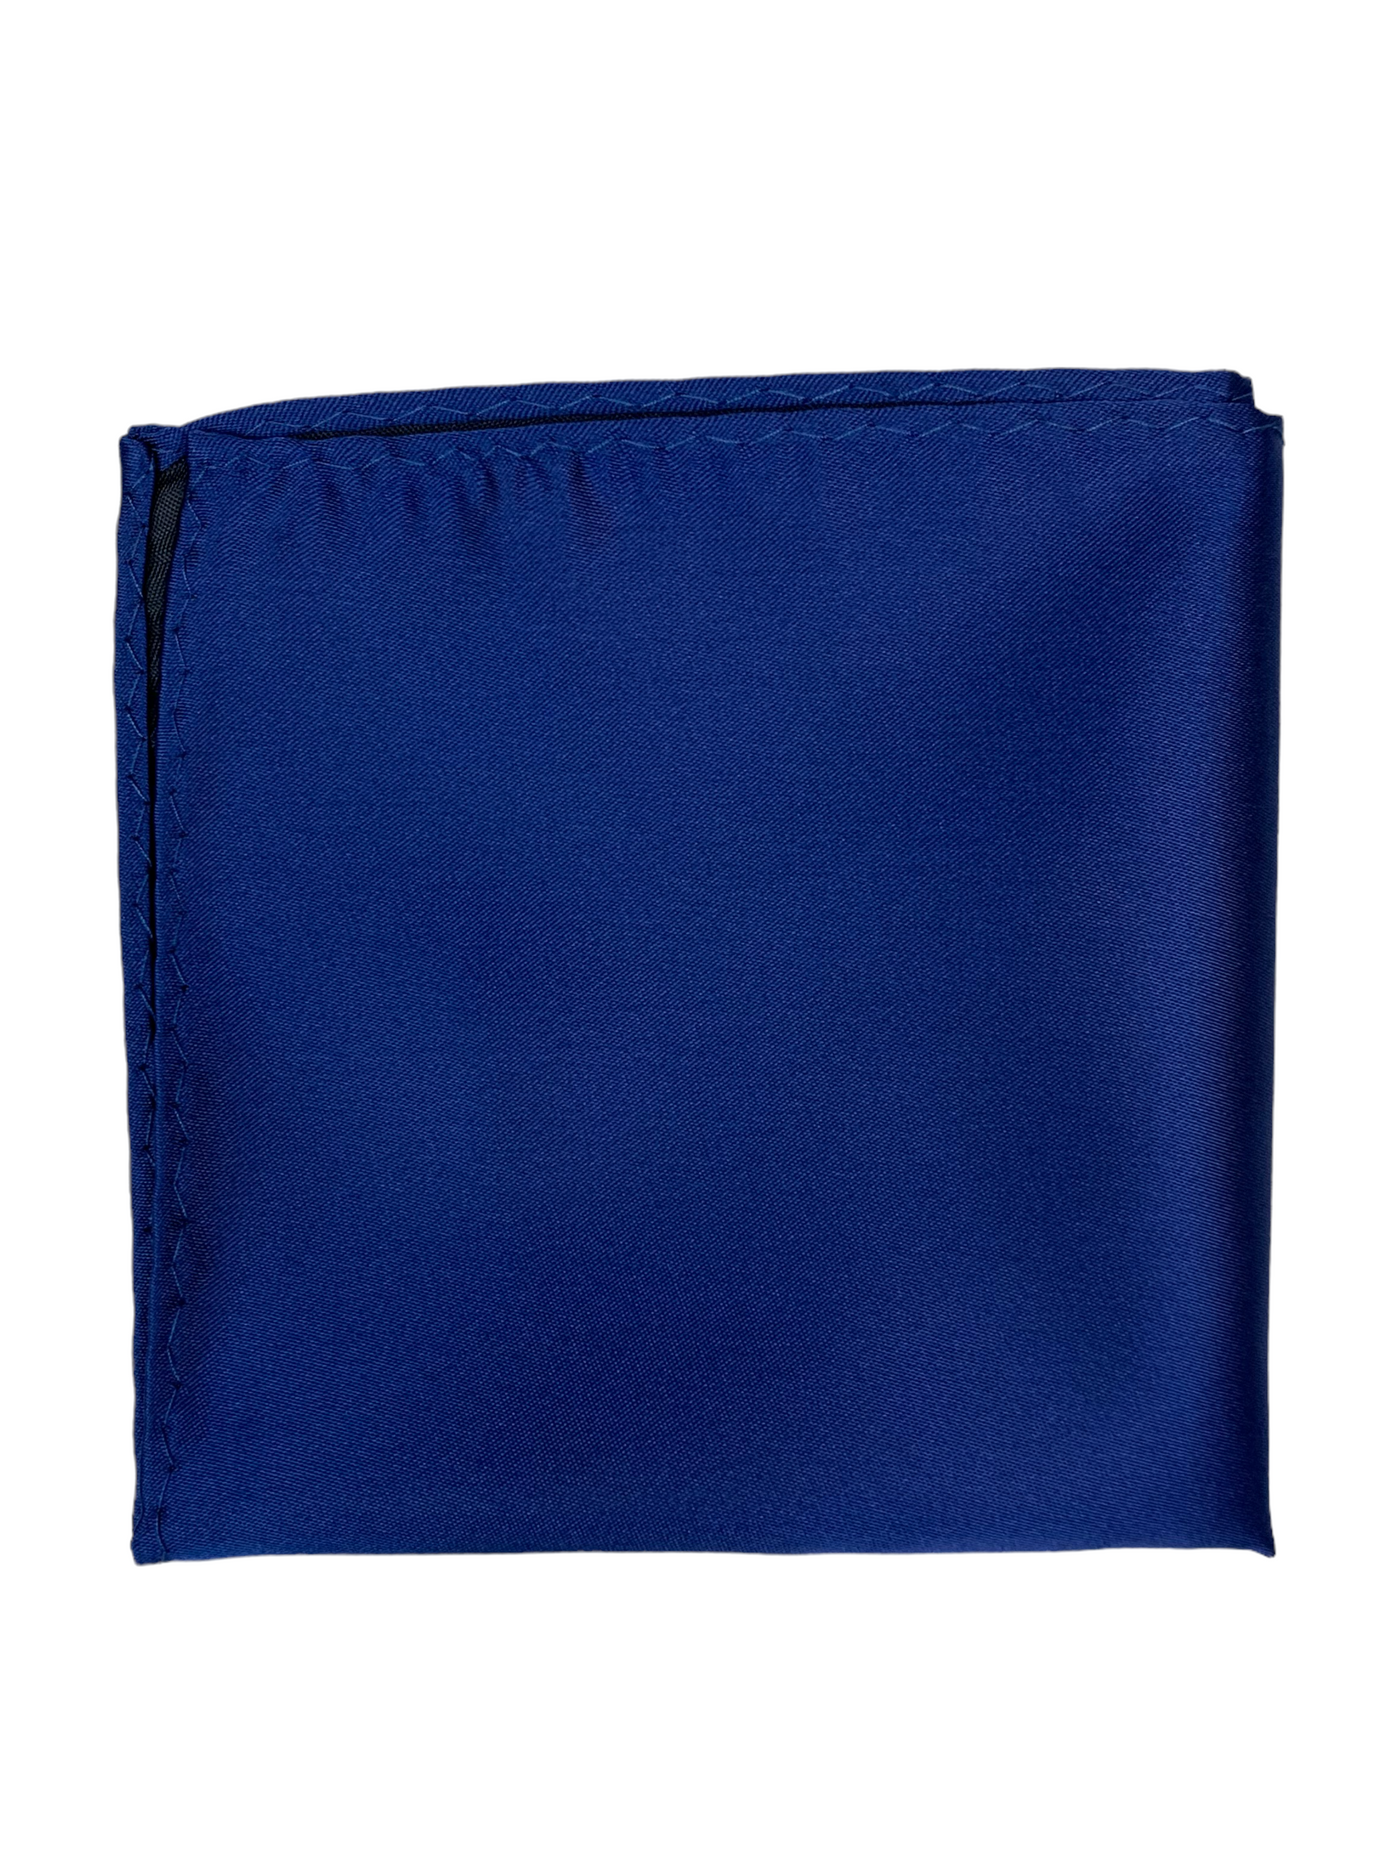 Mouchoir de poche satiné bleu moyen